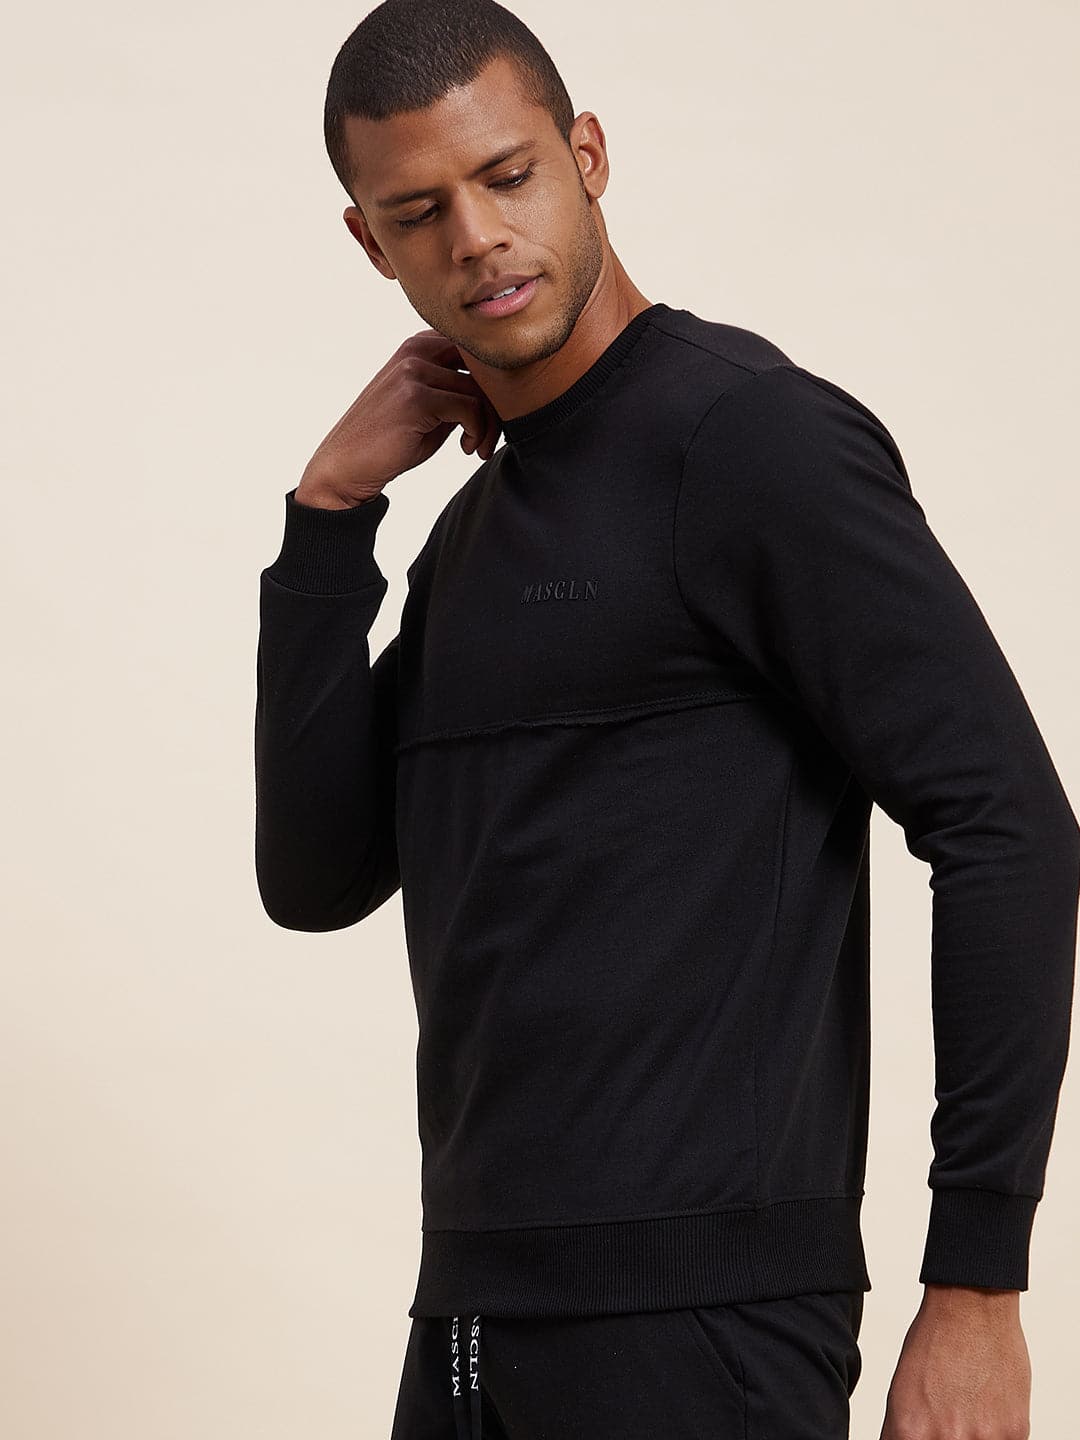 Men's Black MASCLN Puff Print Sweatshirt - LYUSH-MASCLN